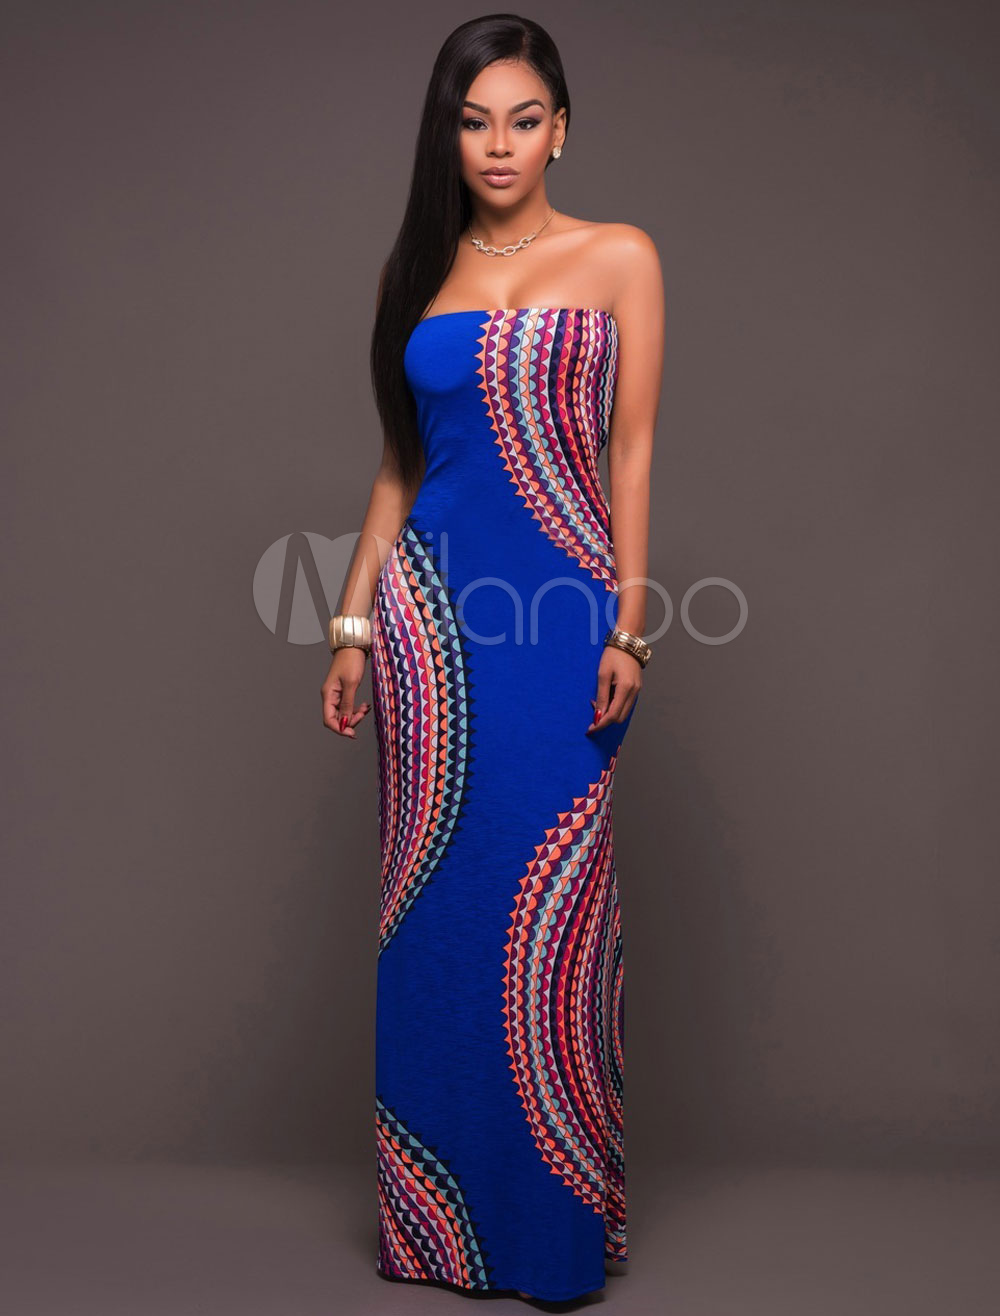 Boho Maxi Dress Blue Strapless Sleeveless Printed Long Dress For Women (Women\\'s Clothing Maxi Dresses) photo